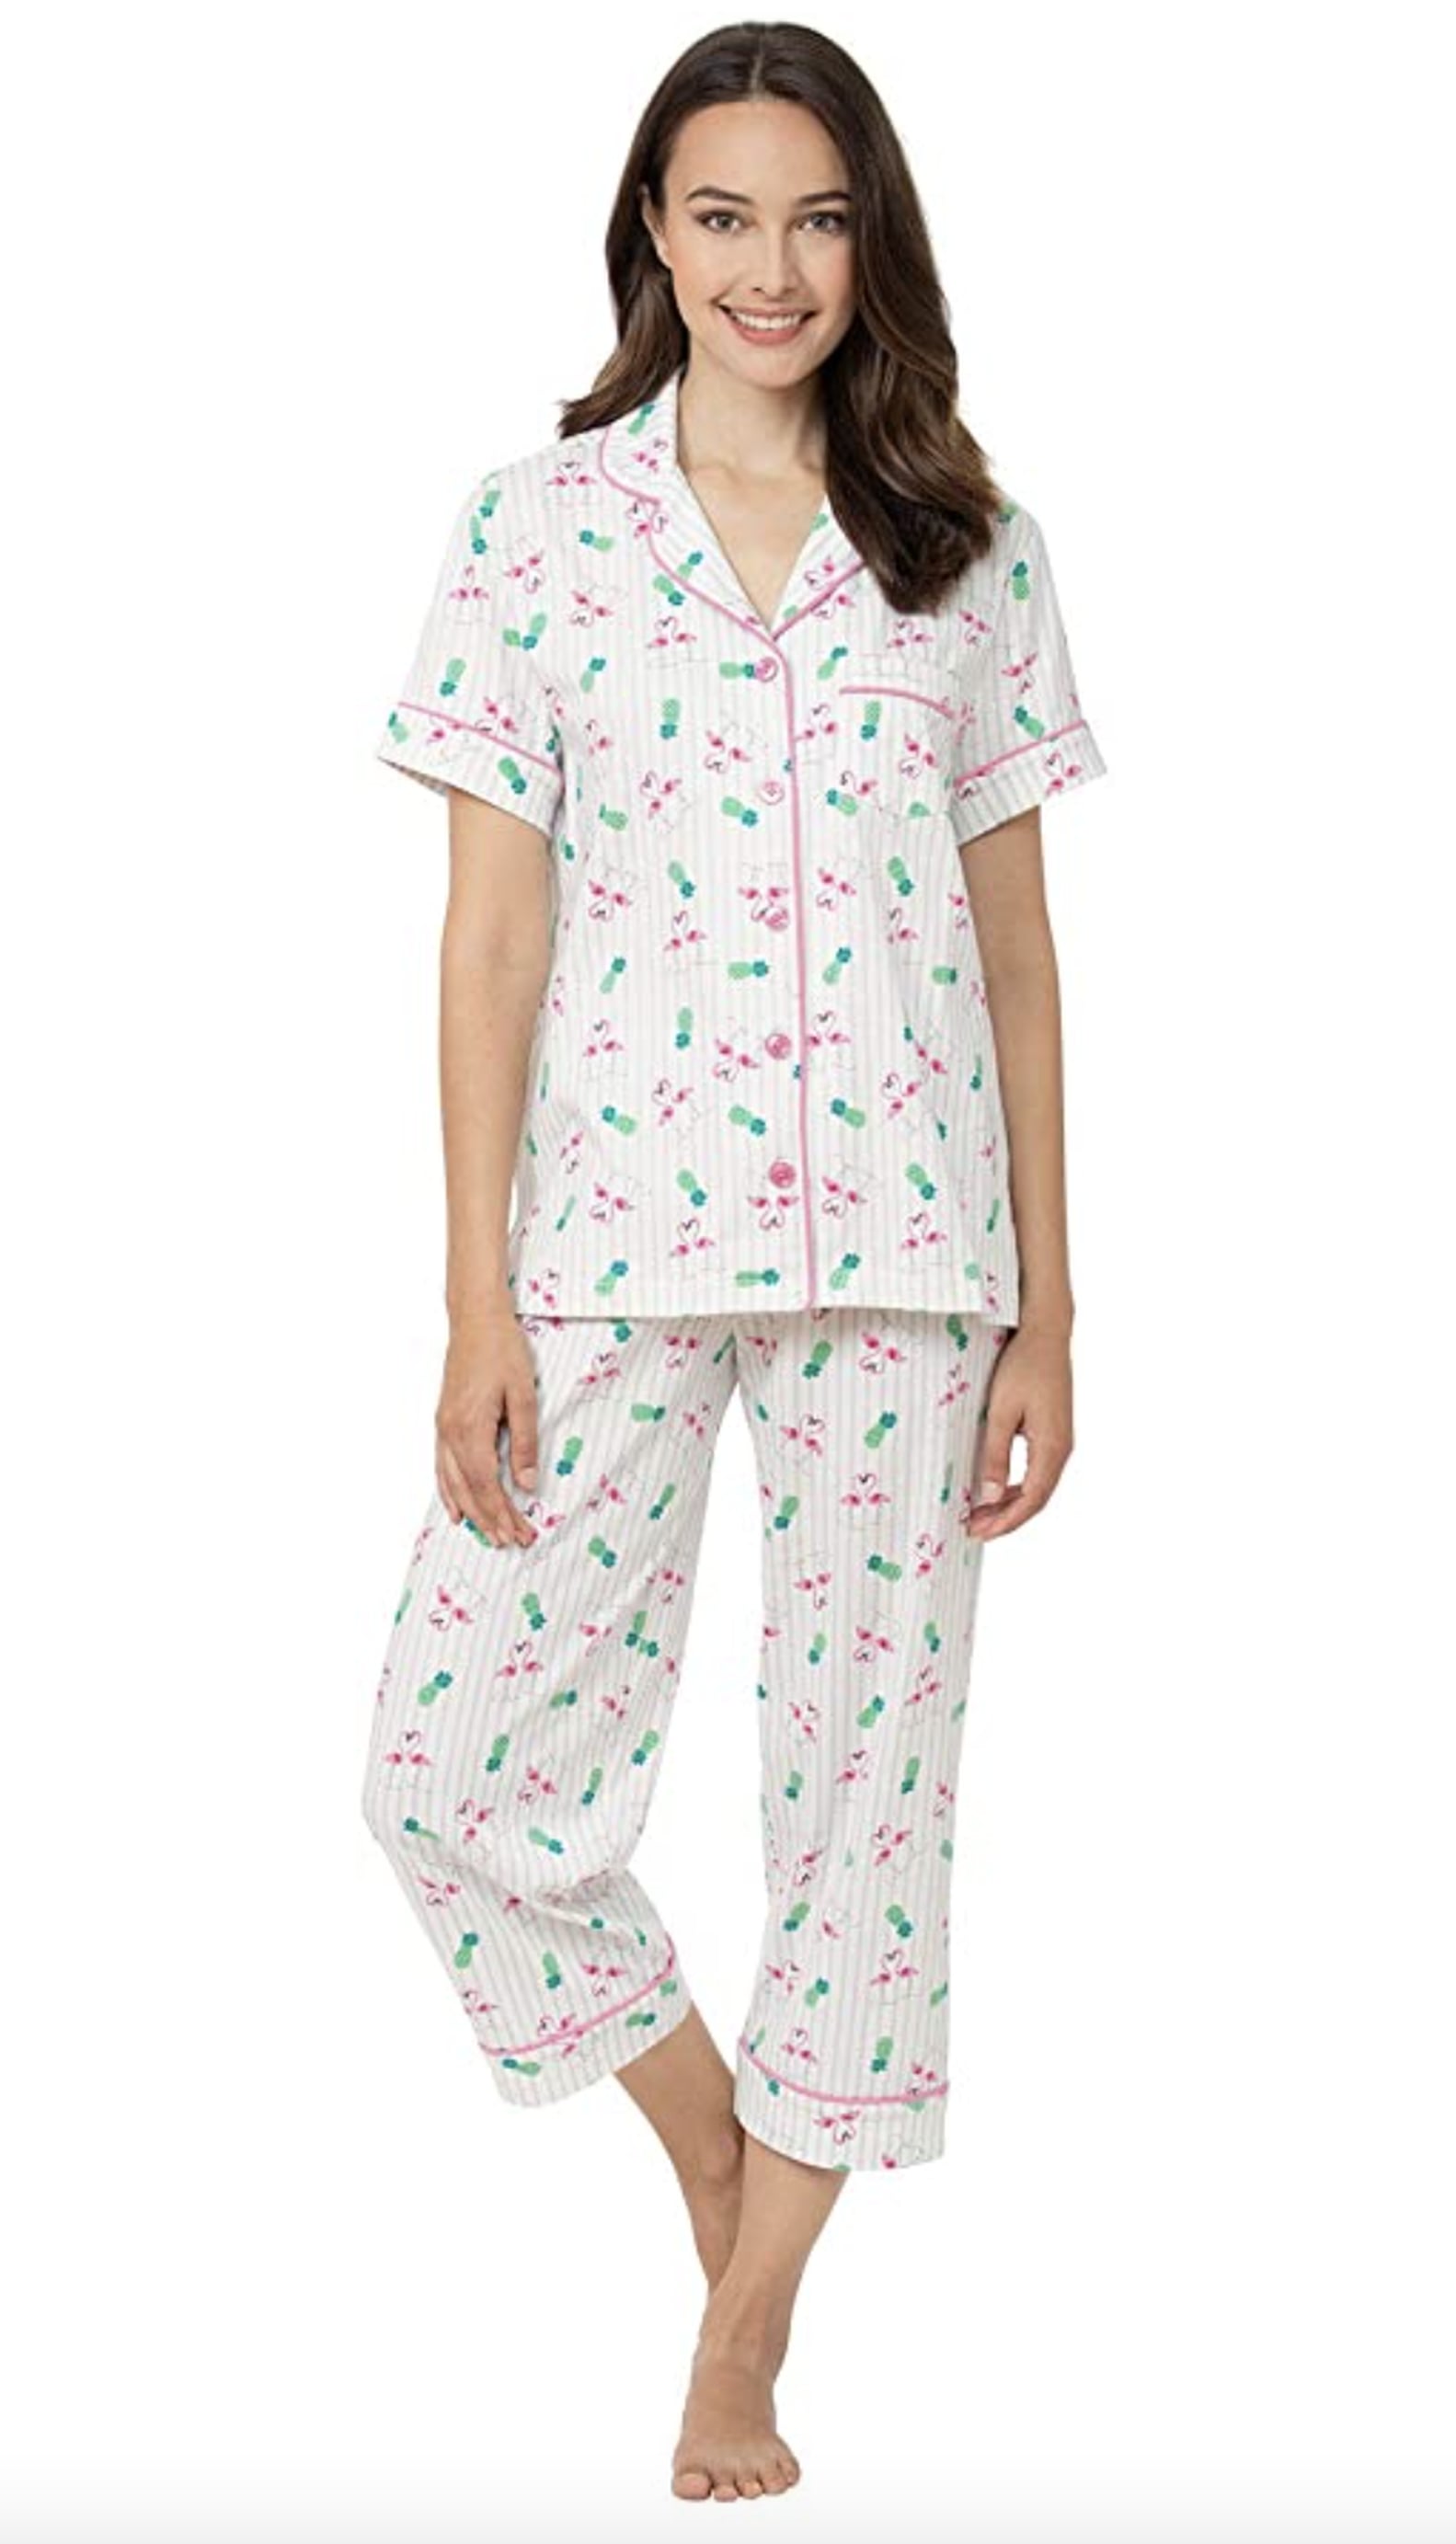 Best Cute Pajama Sets For Women on Amazon Fashion | POPSUGAR Fashion